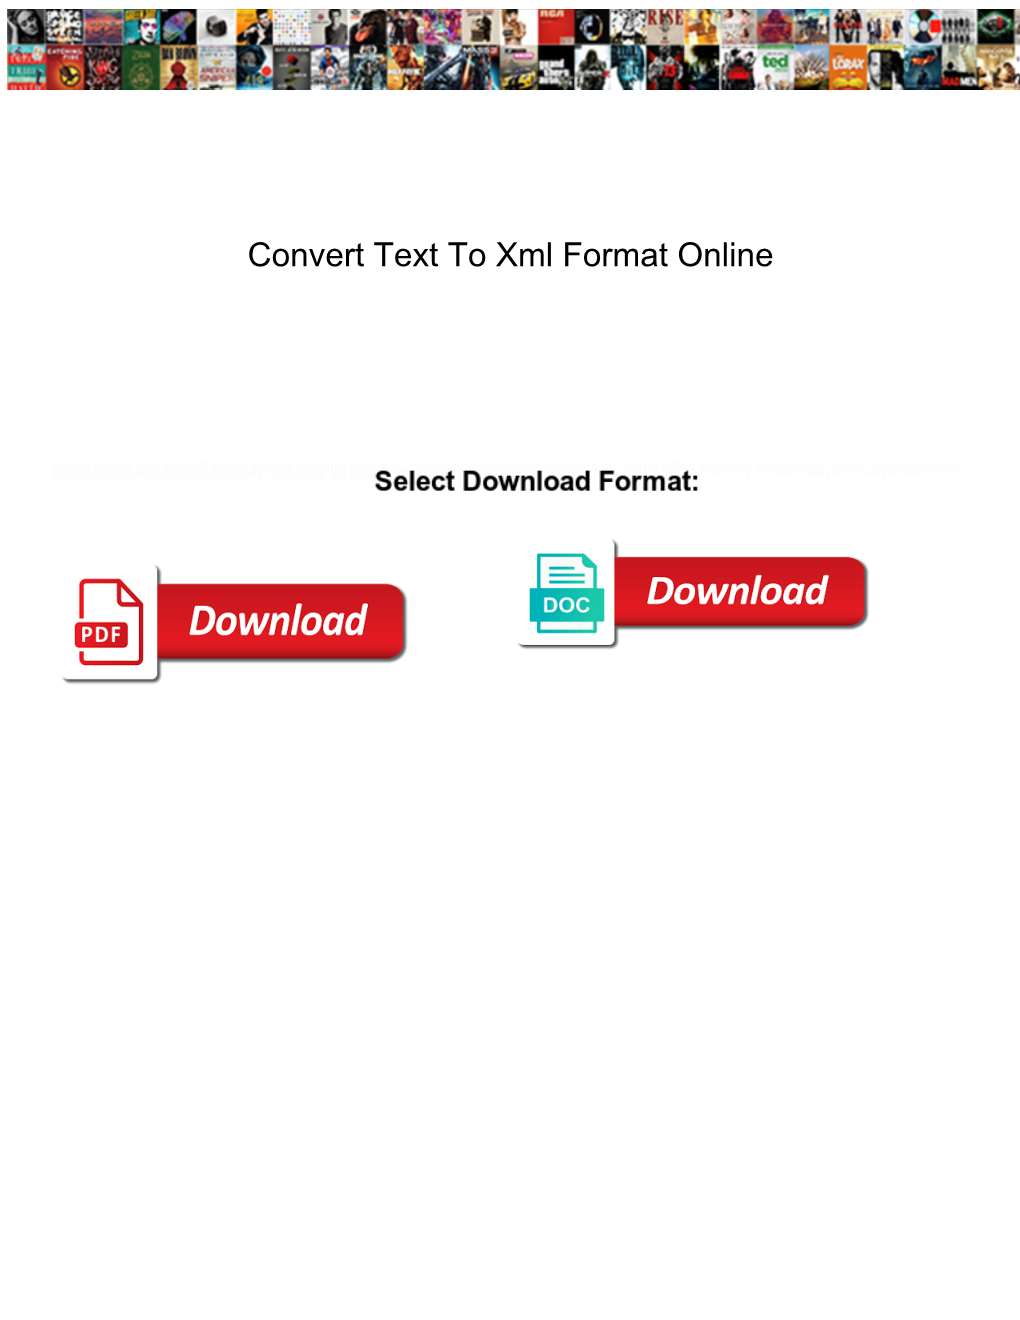 Convert Text to Xml Format Online